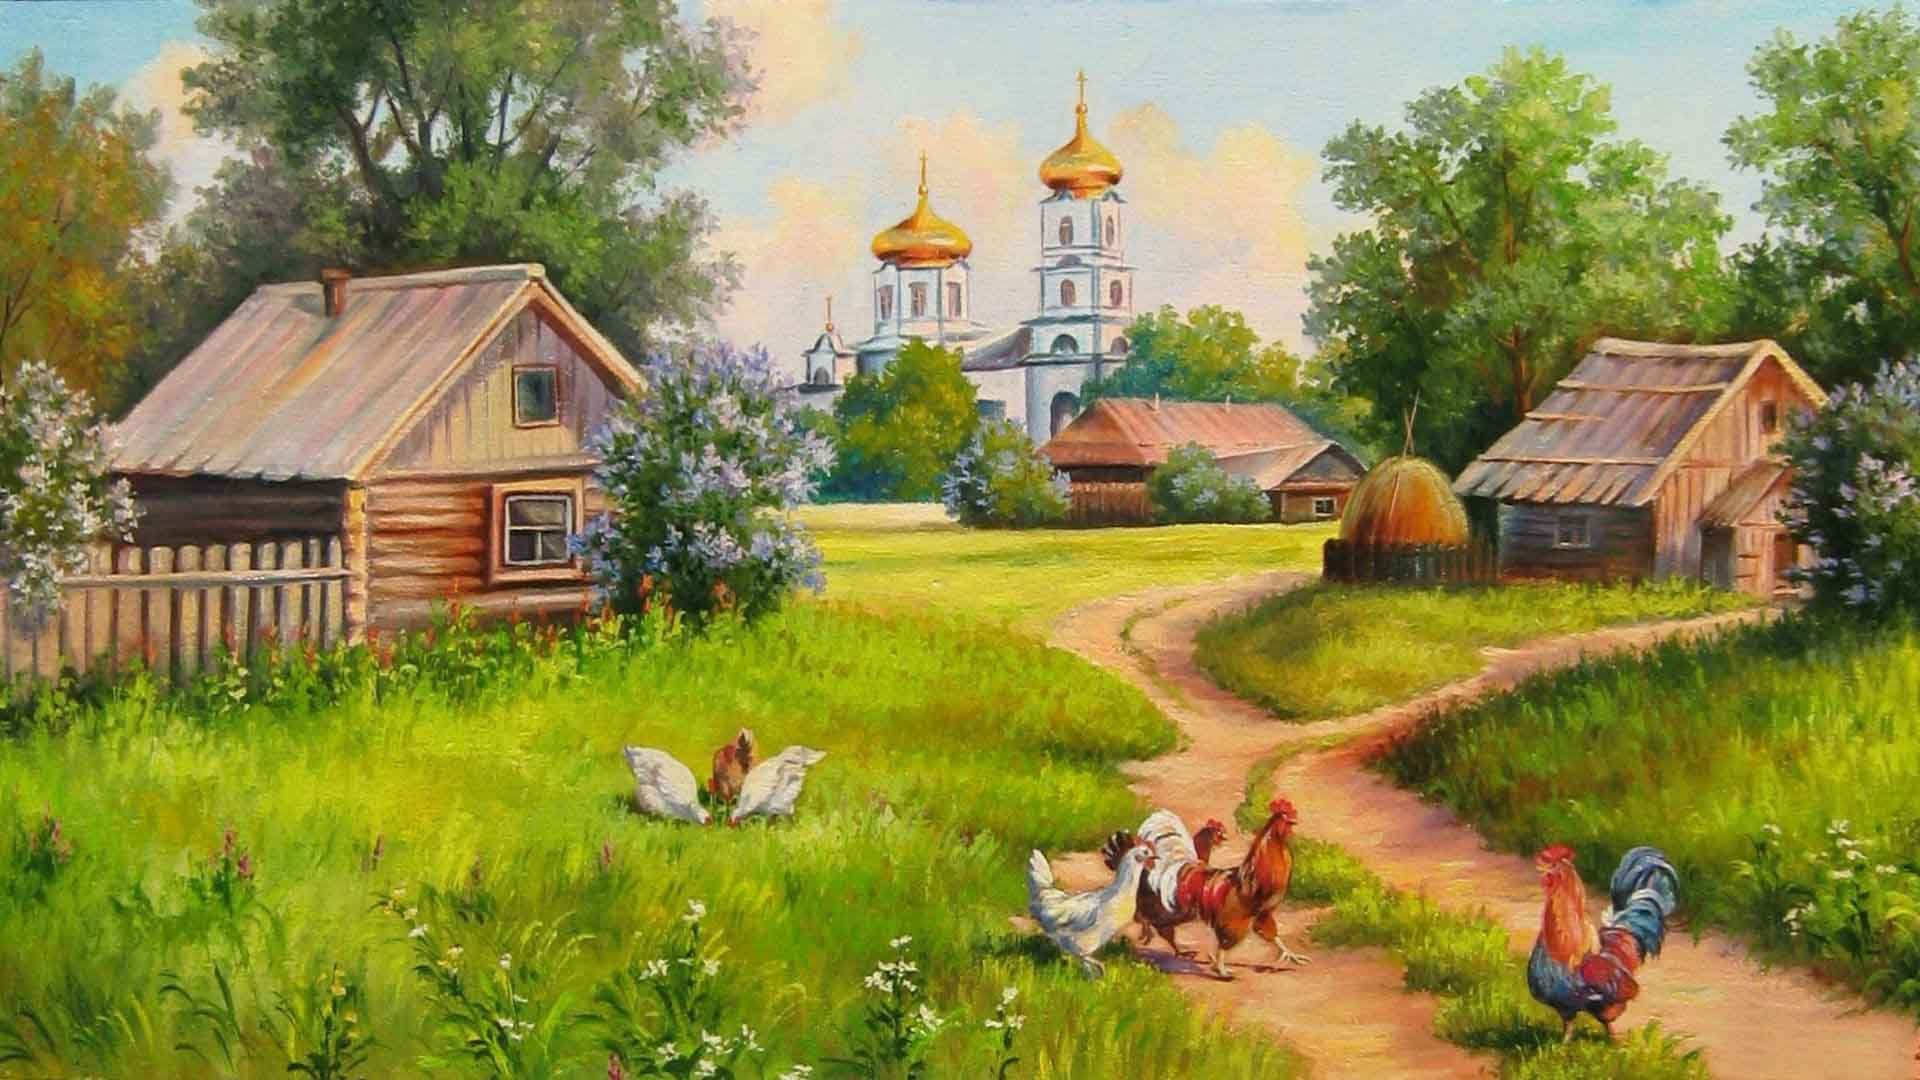 Beautiful Village Paintings Wallpapers Free Download | HD Free ...